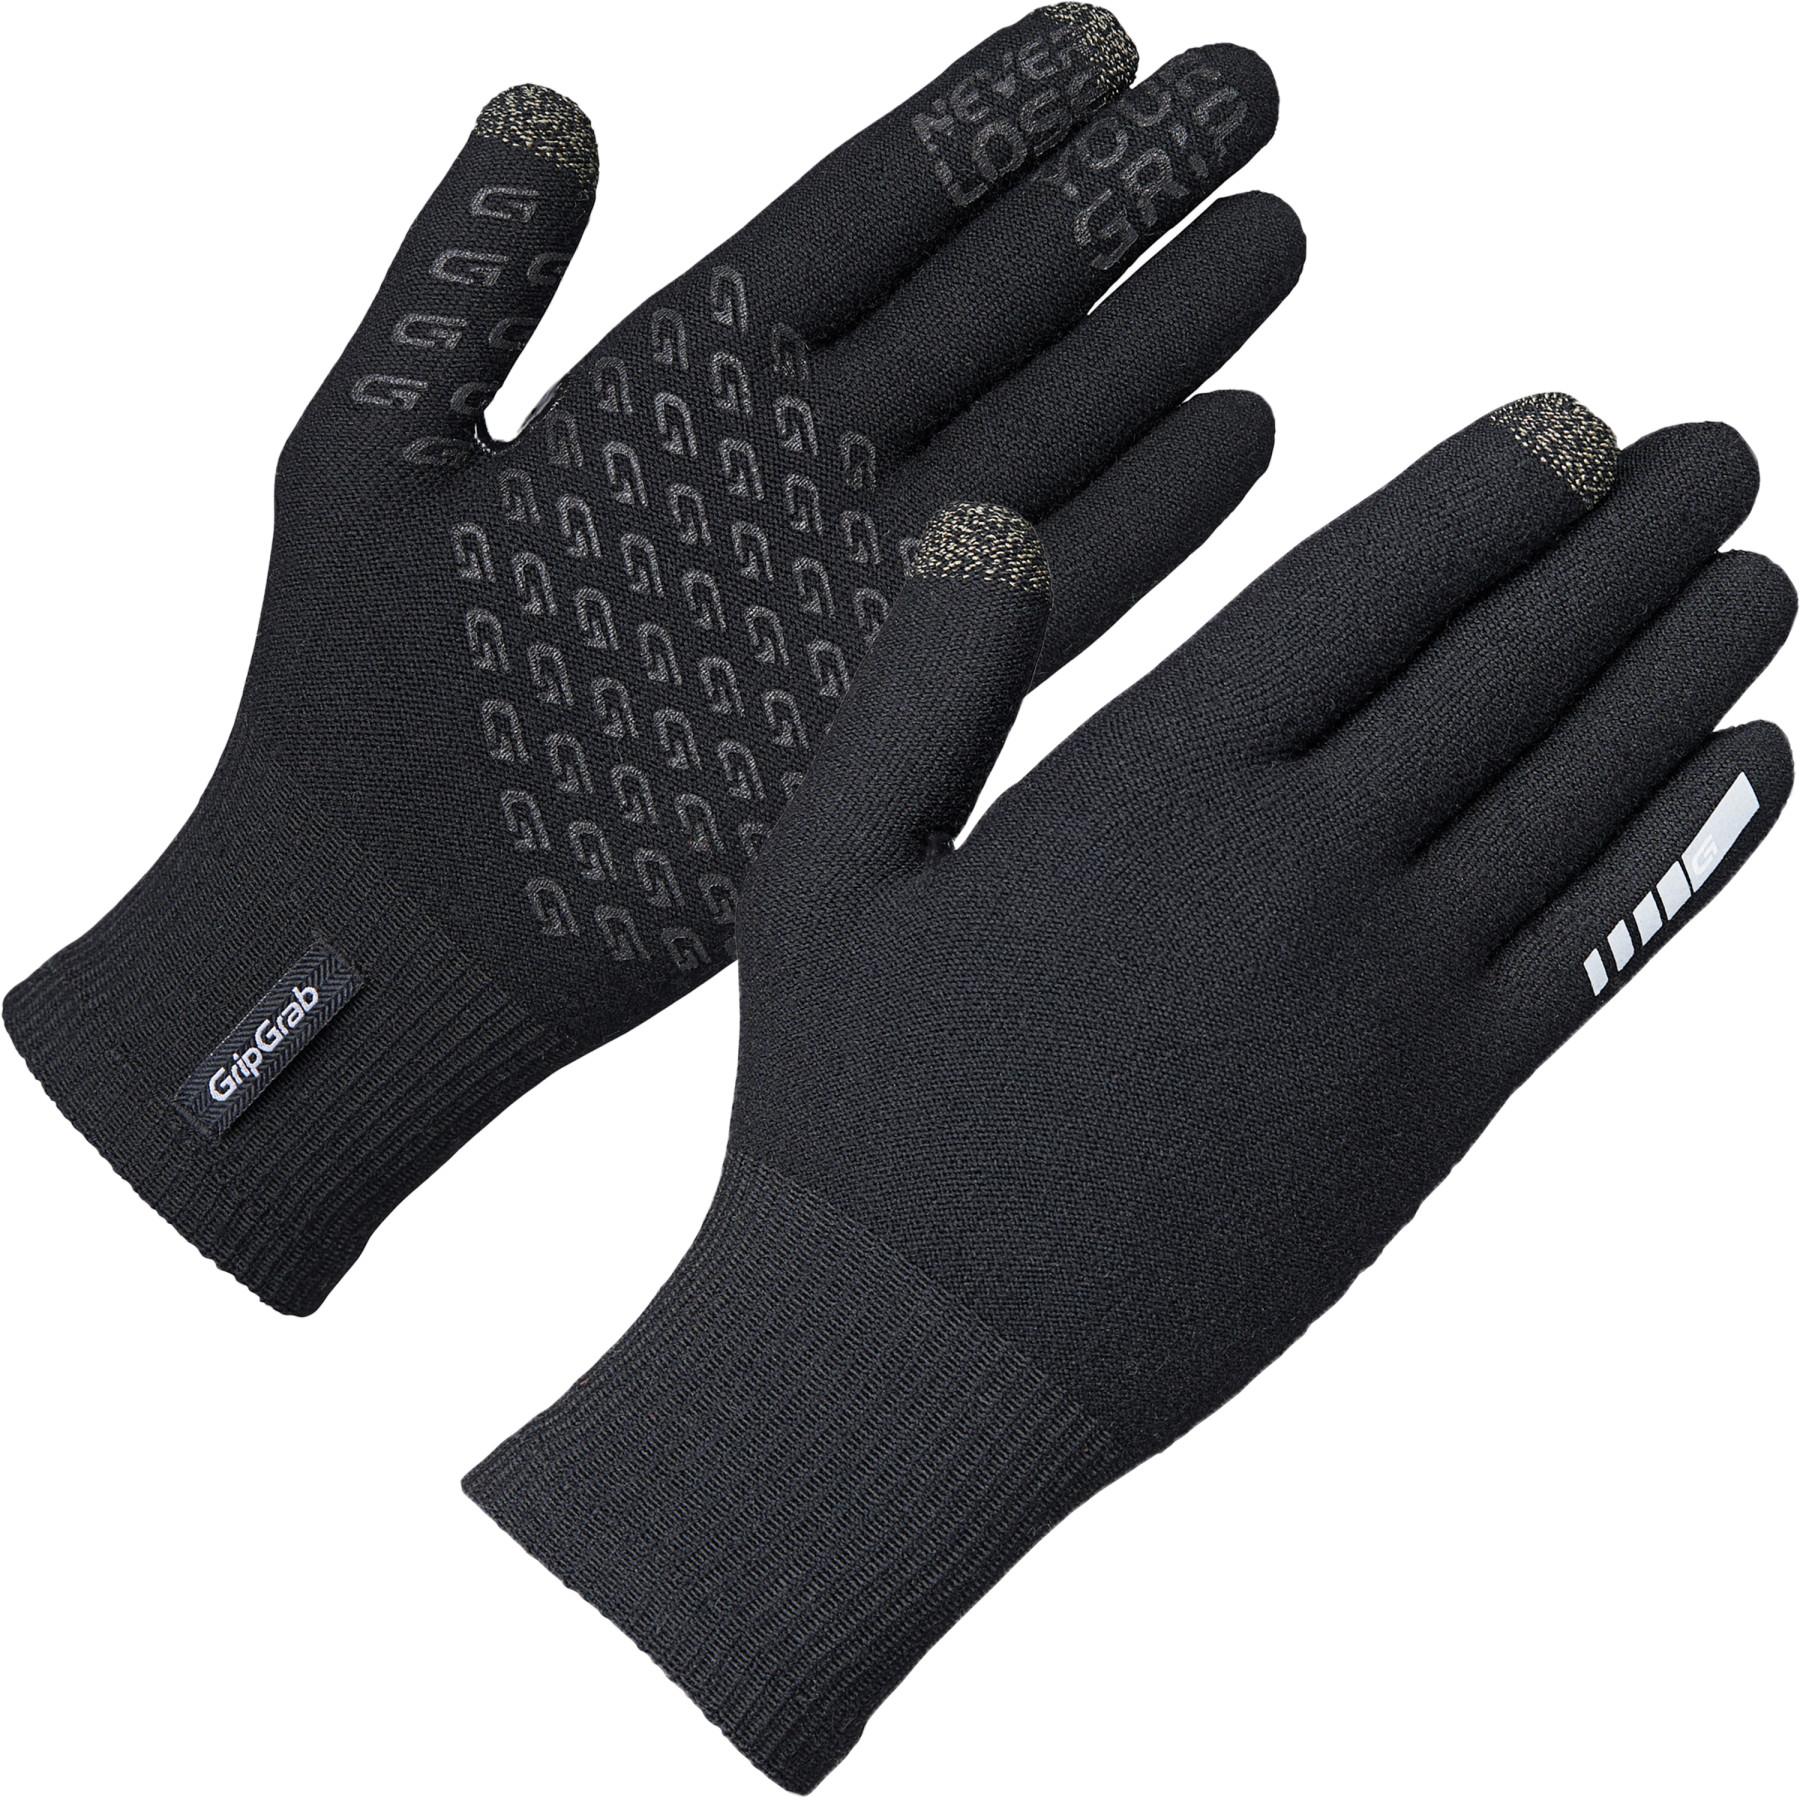 Gripgrab Primavera Merino Glove Ii - Black